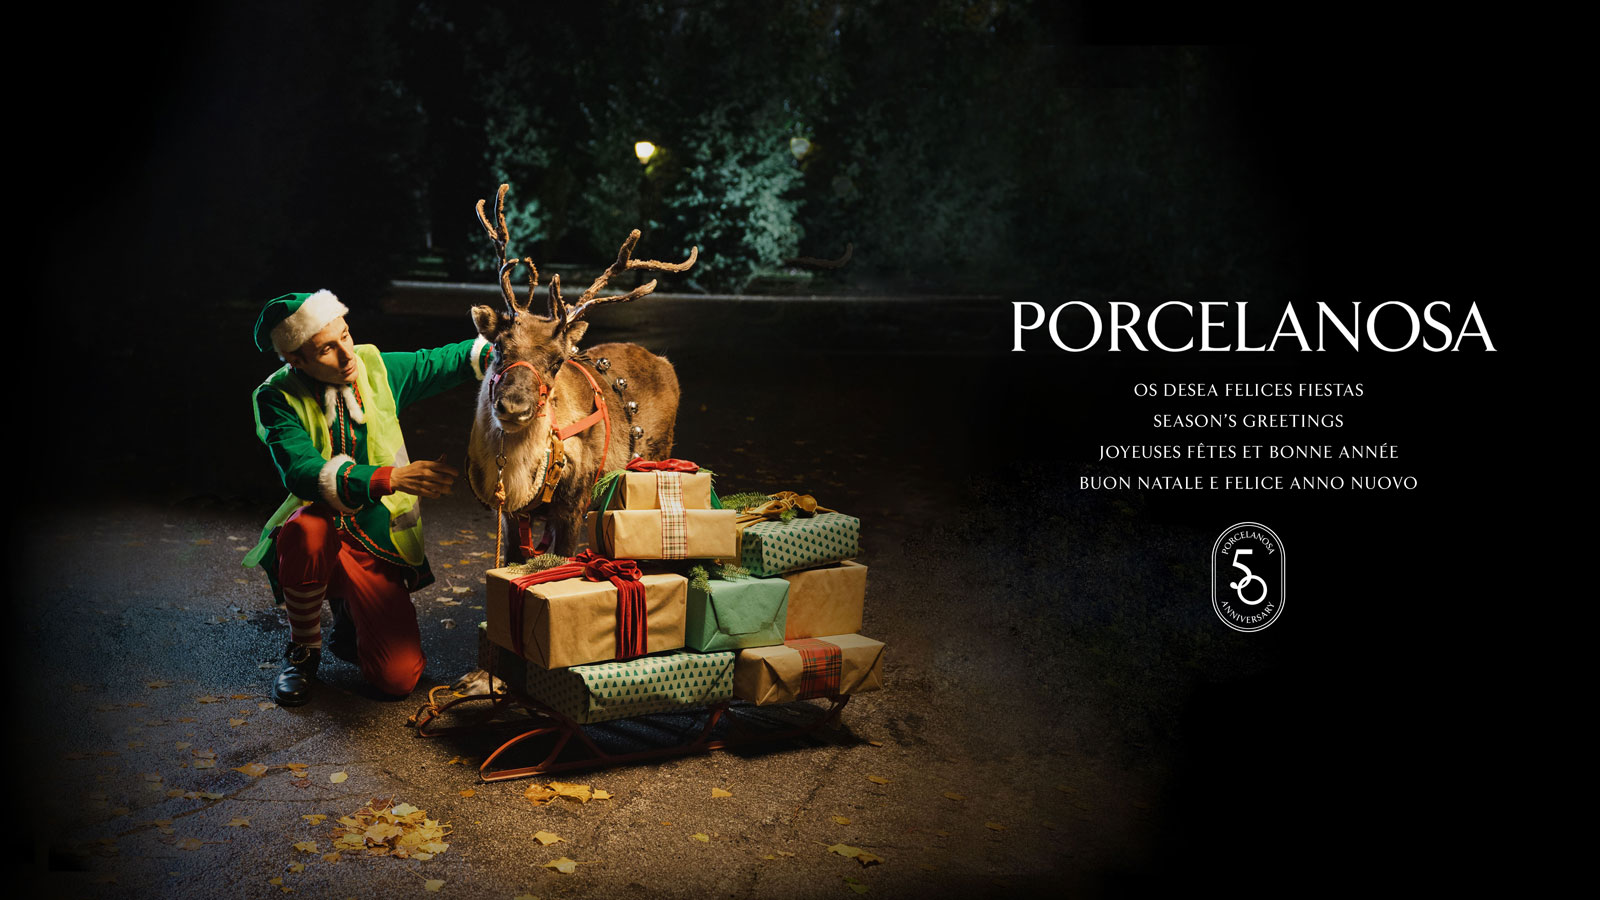 Happy holidays from Porcelanosa